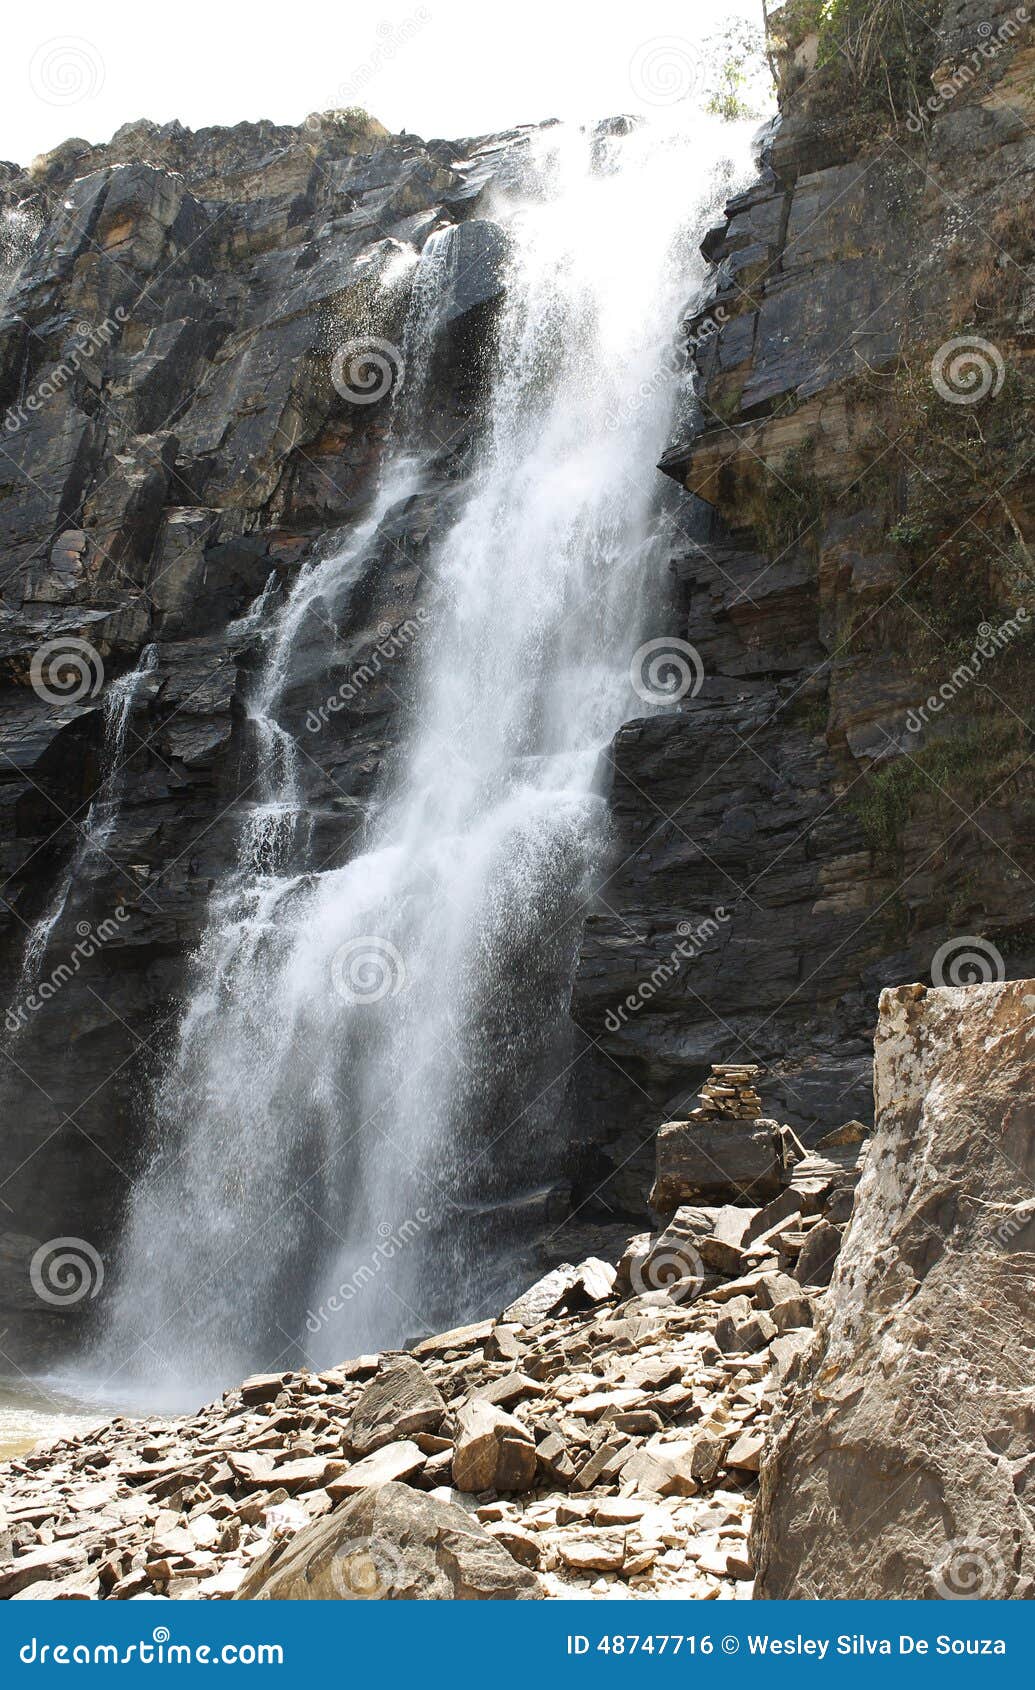 waterfall pirenopolis - goias - brazil